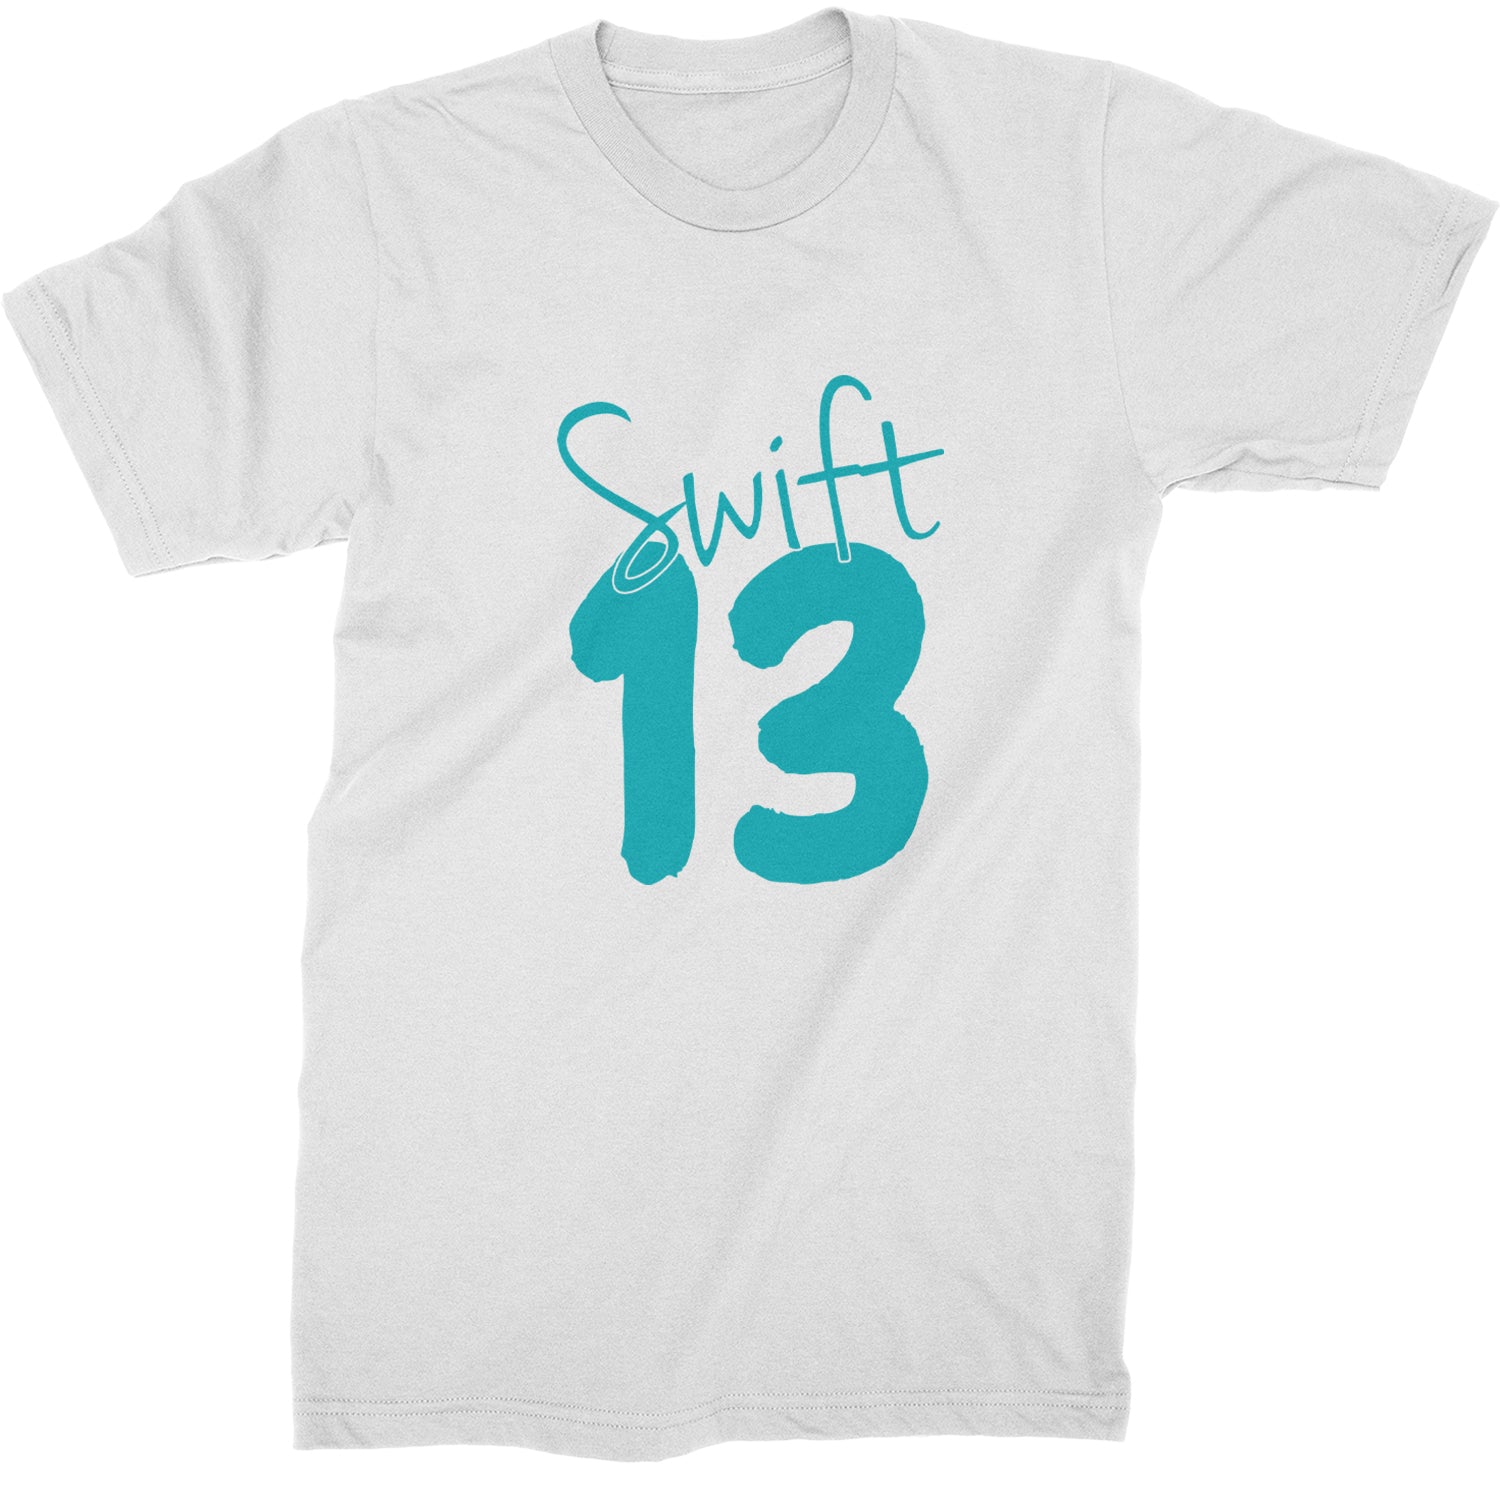 13 Swift 13 Lucky Number Era TTPD Mens T-shirt White